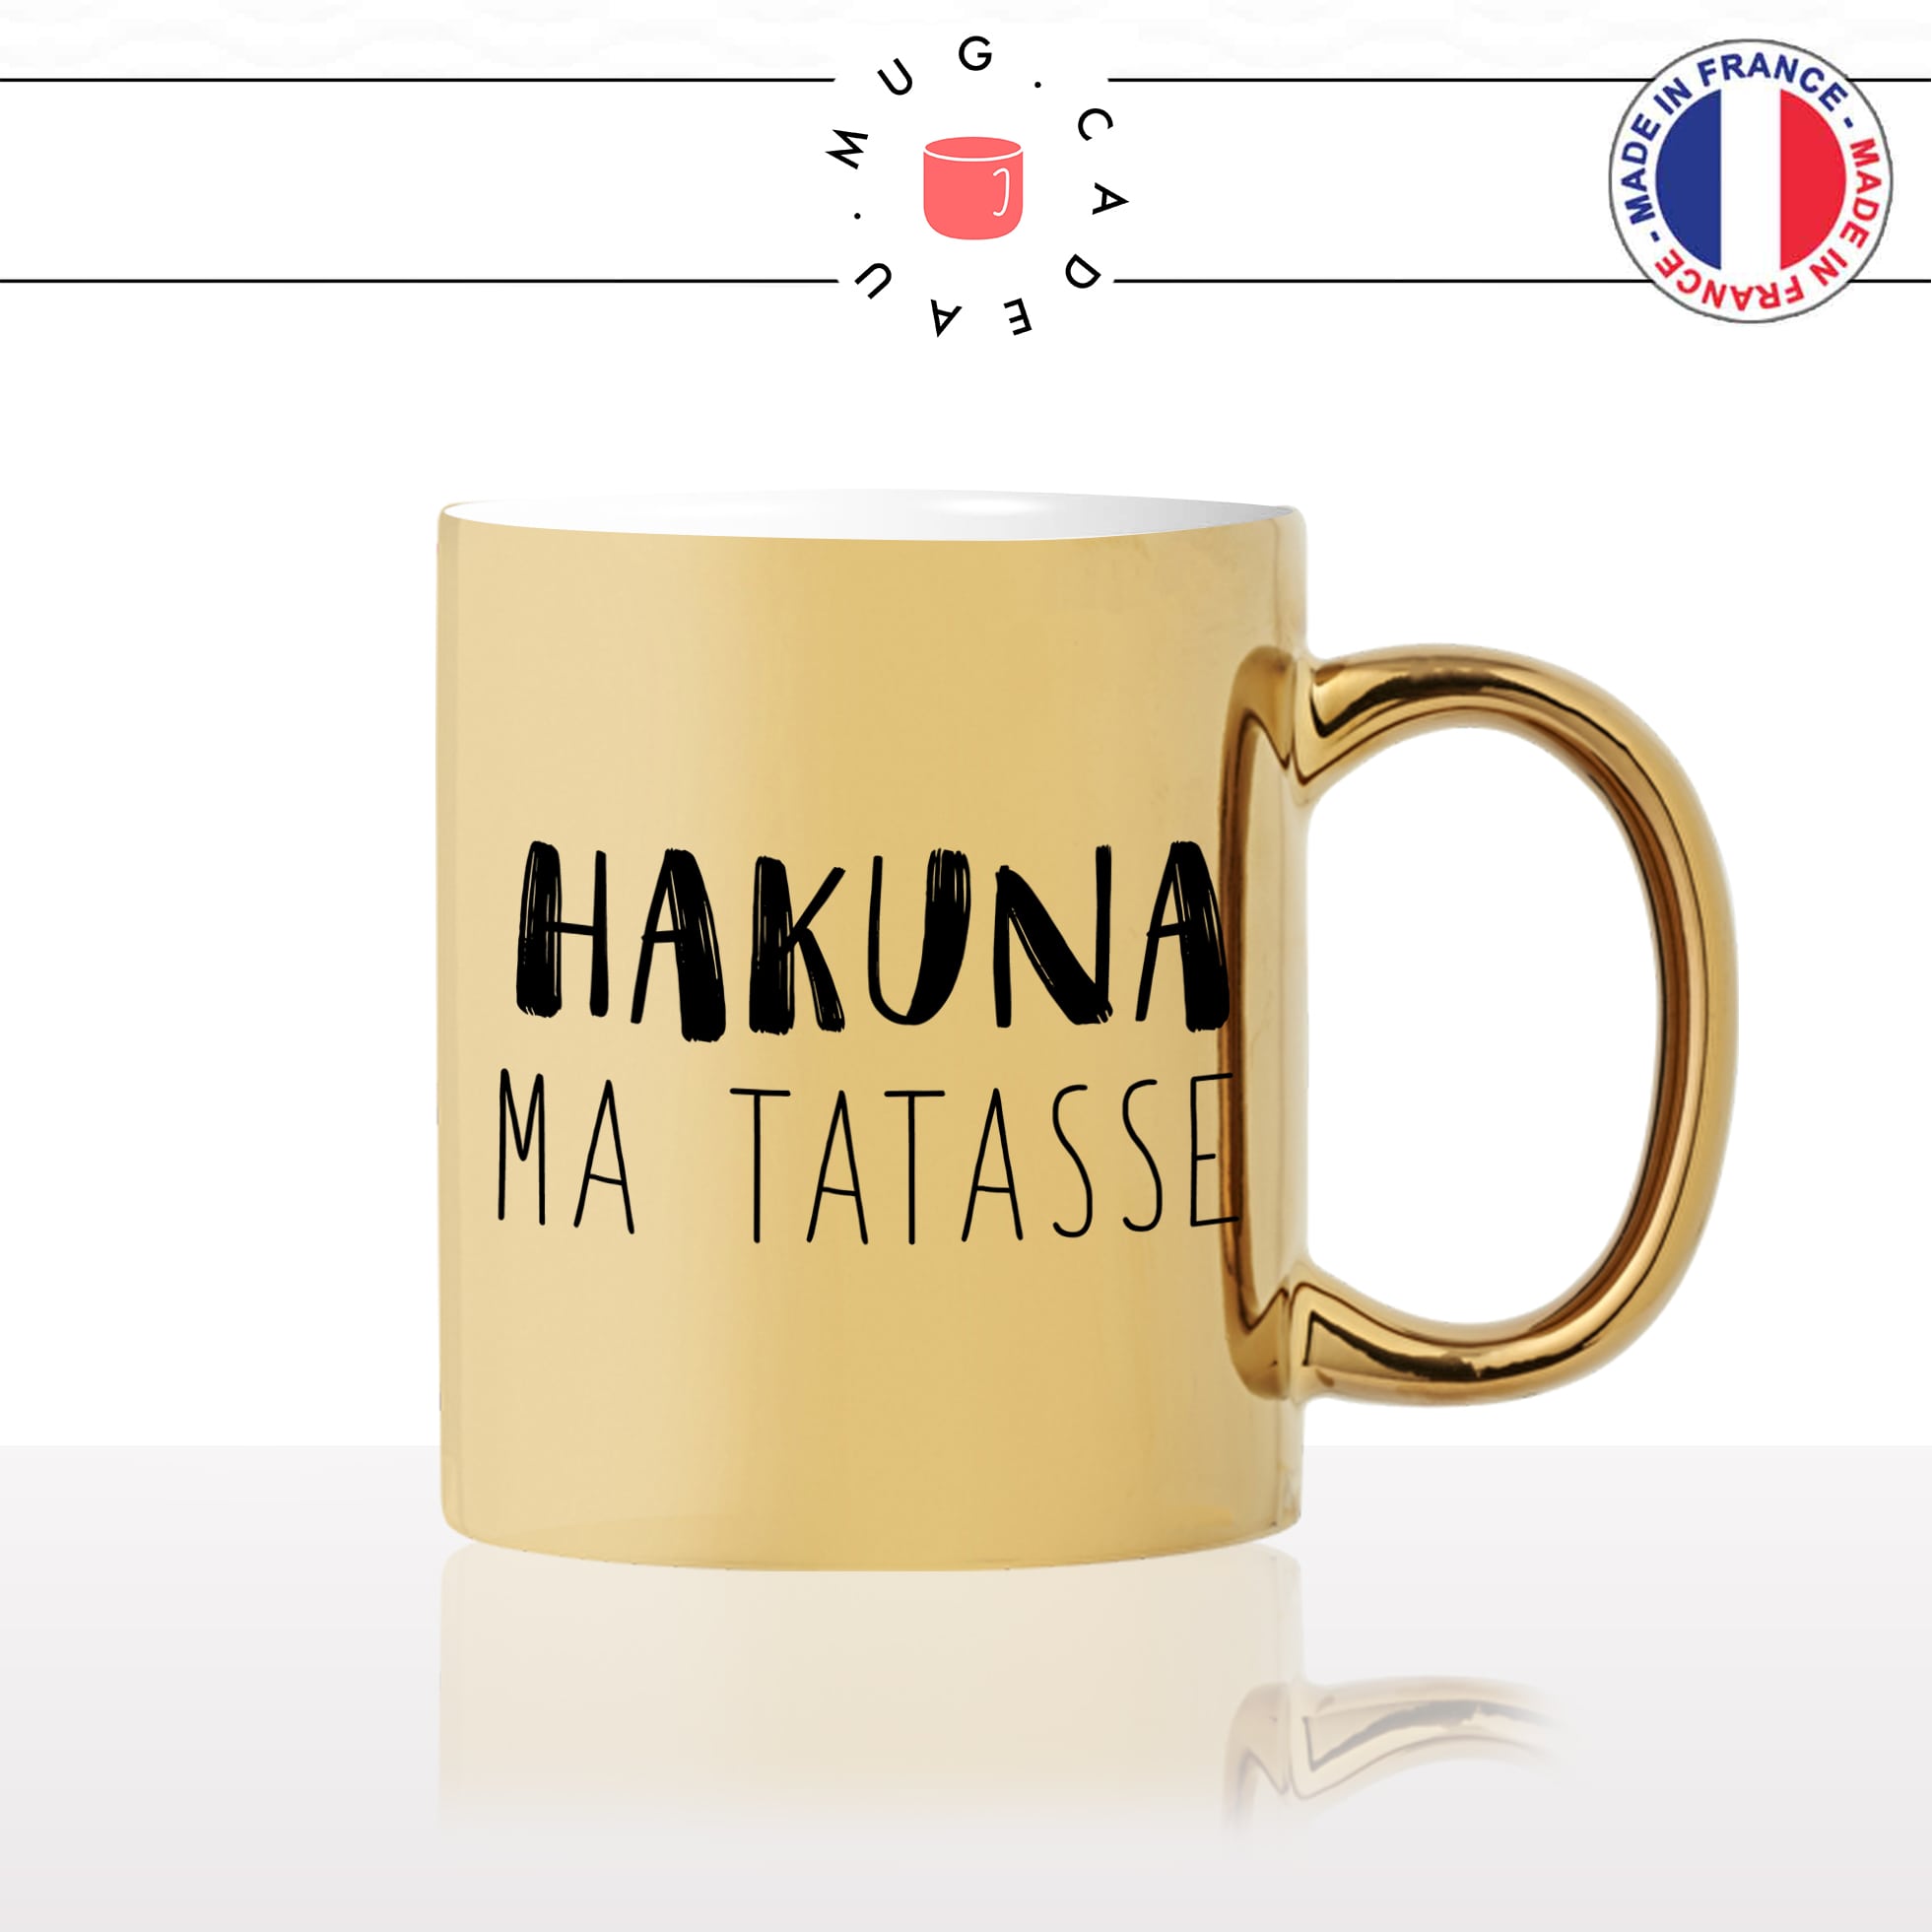 mug-tasse-doré-or-gold-hakuna-ma-tatasse-motto-original-humour-fun-idée-cadeau-personnalisé-café-thé2-min